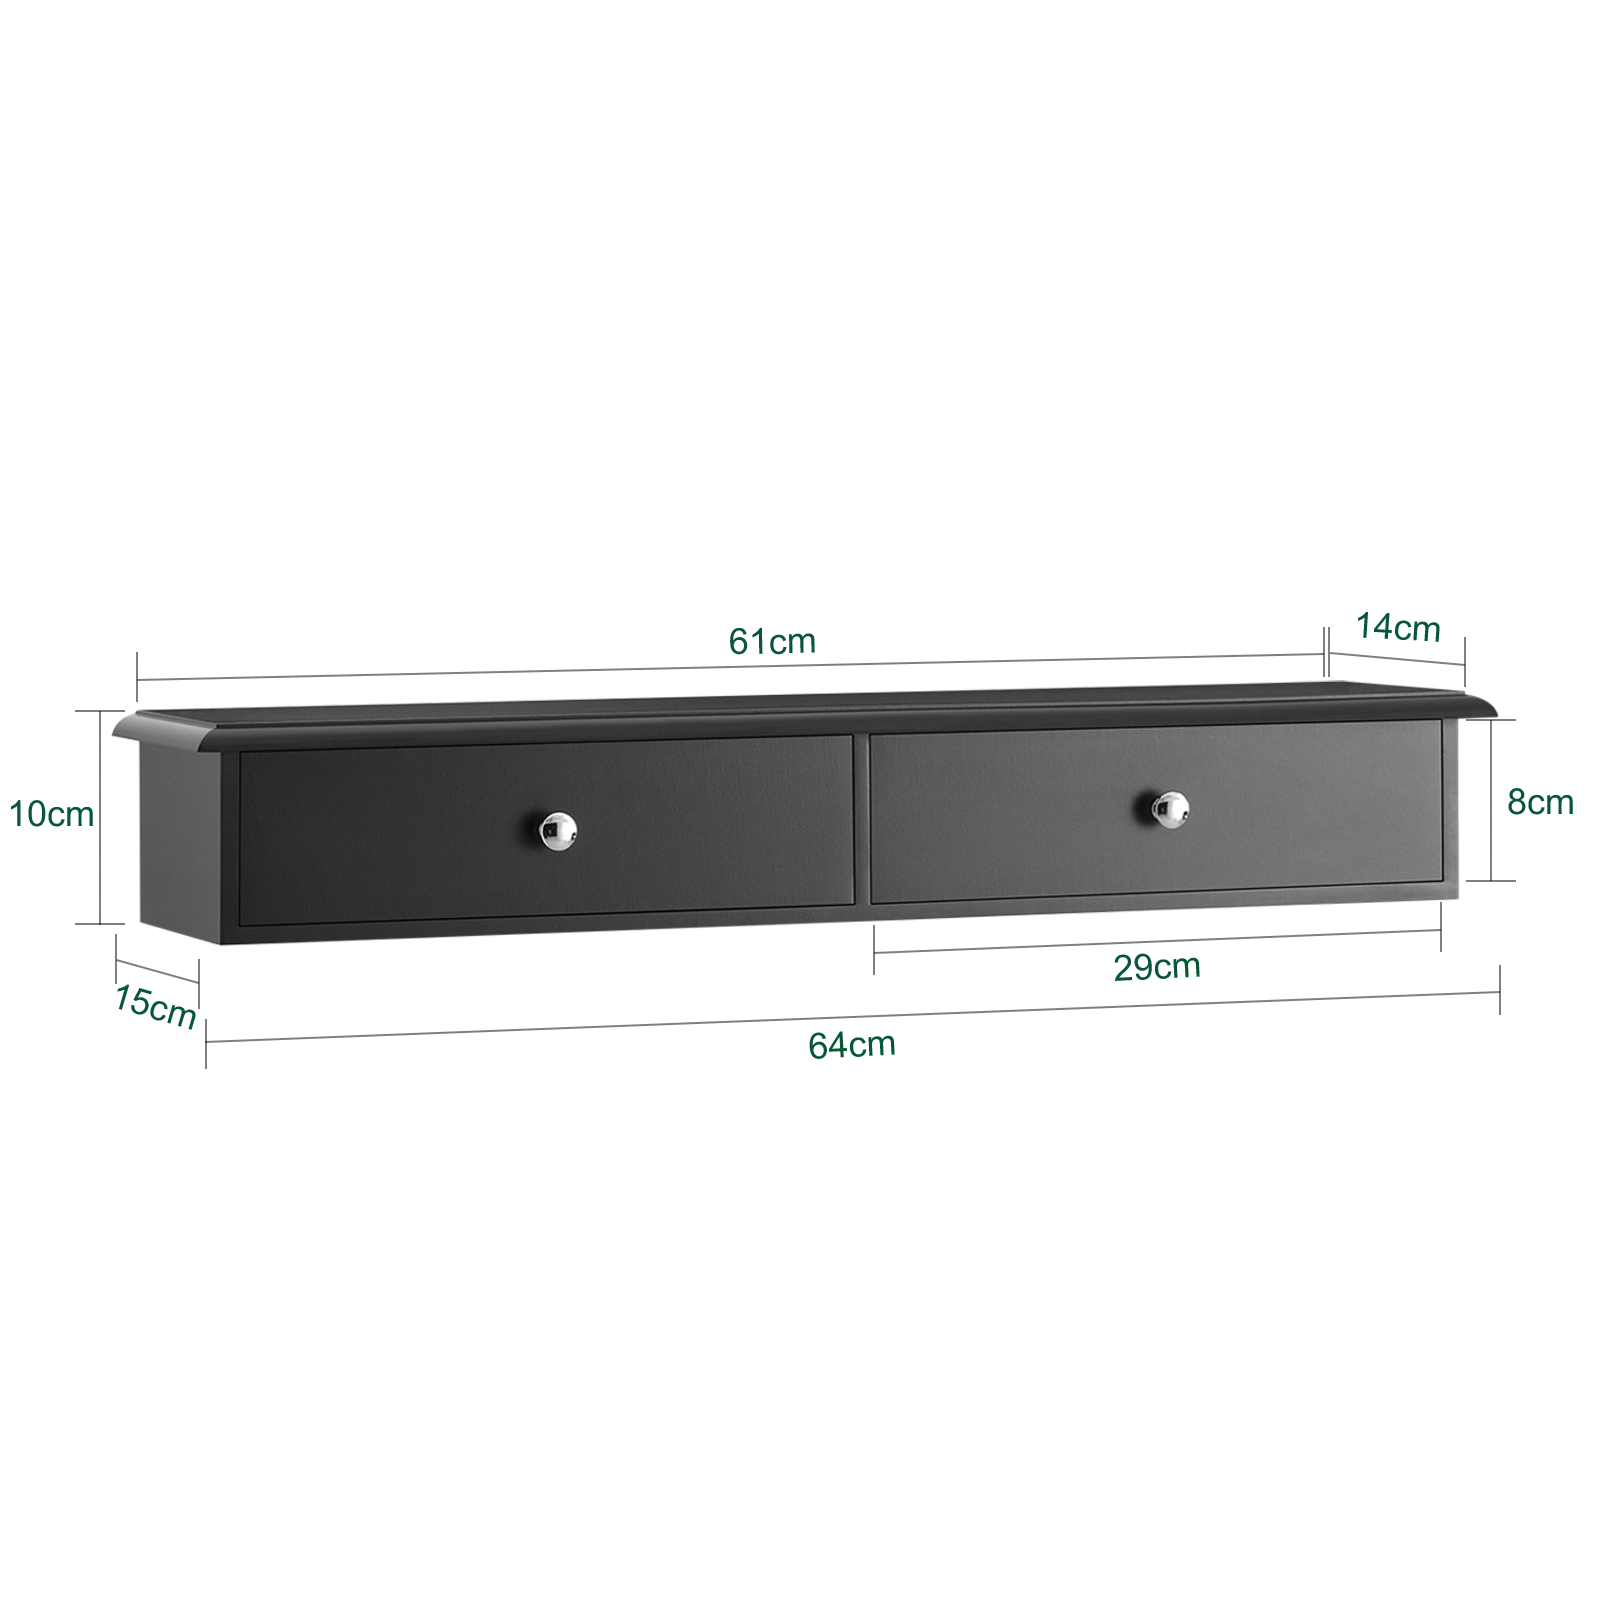 SoBuy Wall Mounted Display Storage Shelf Unit with 2 Drawers FRG43-SCH